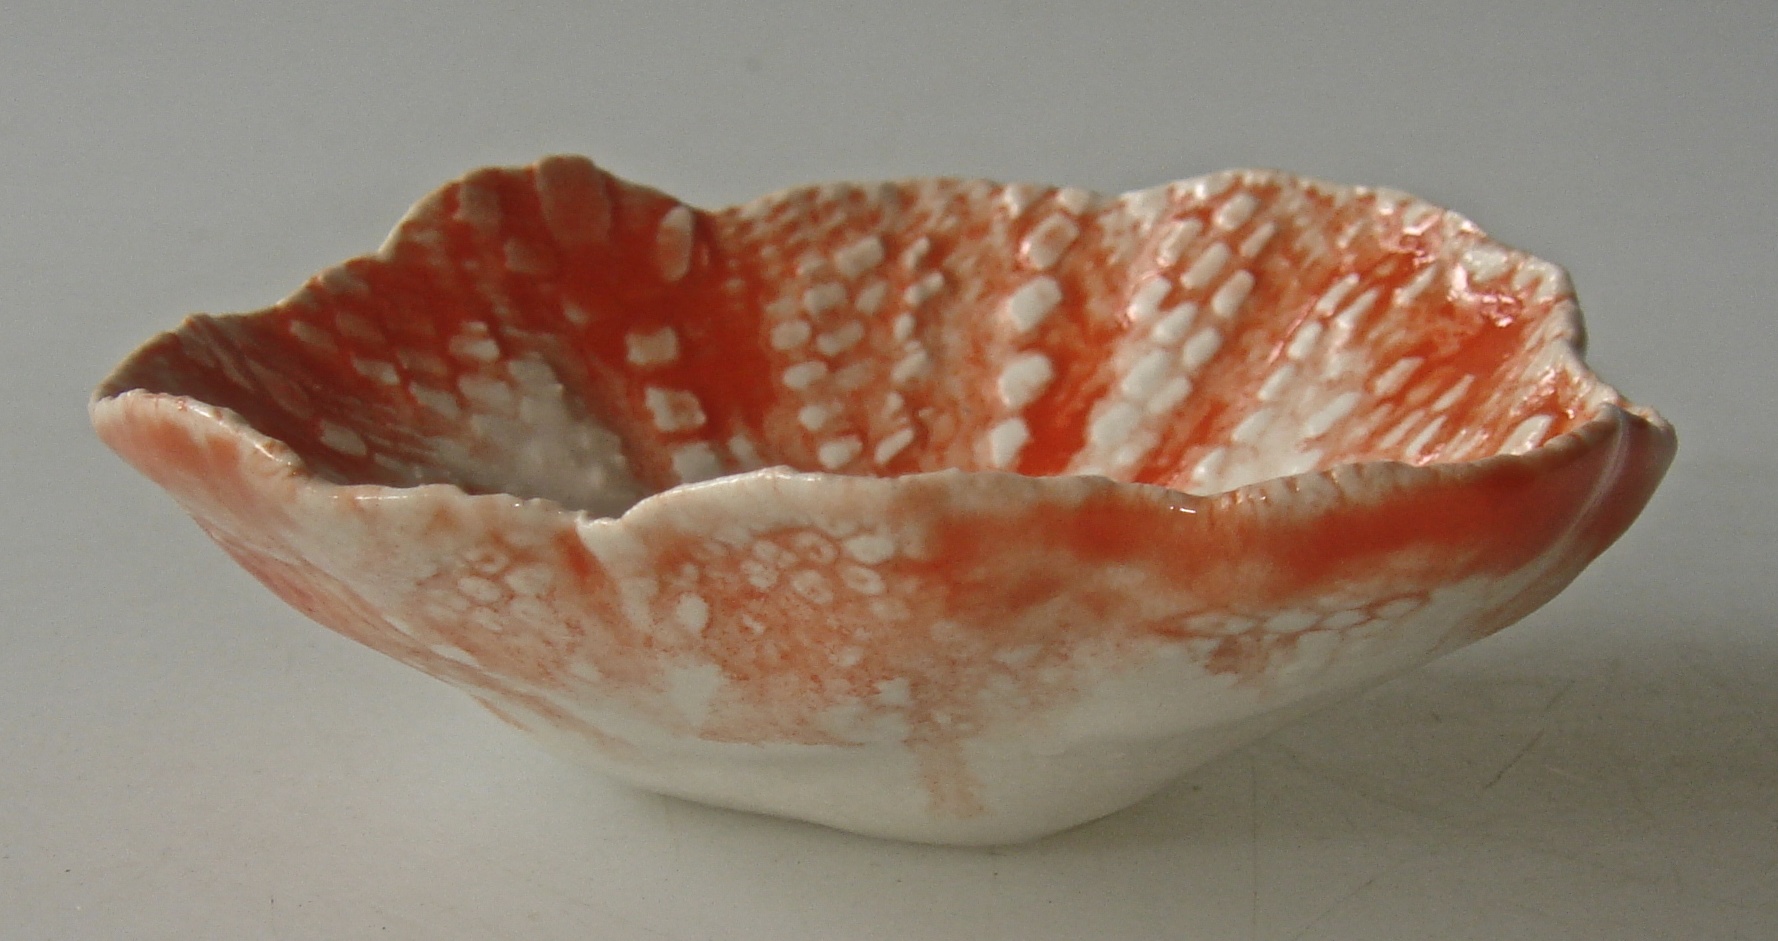 tangerine bowl